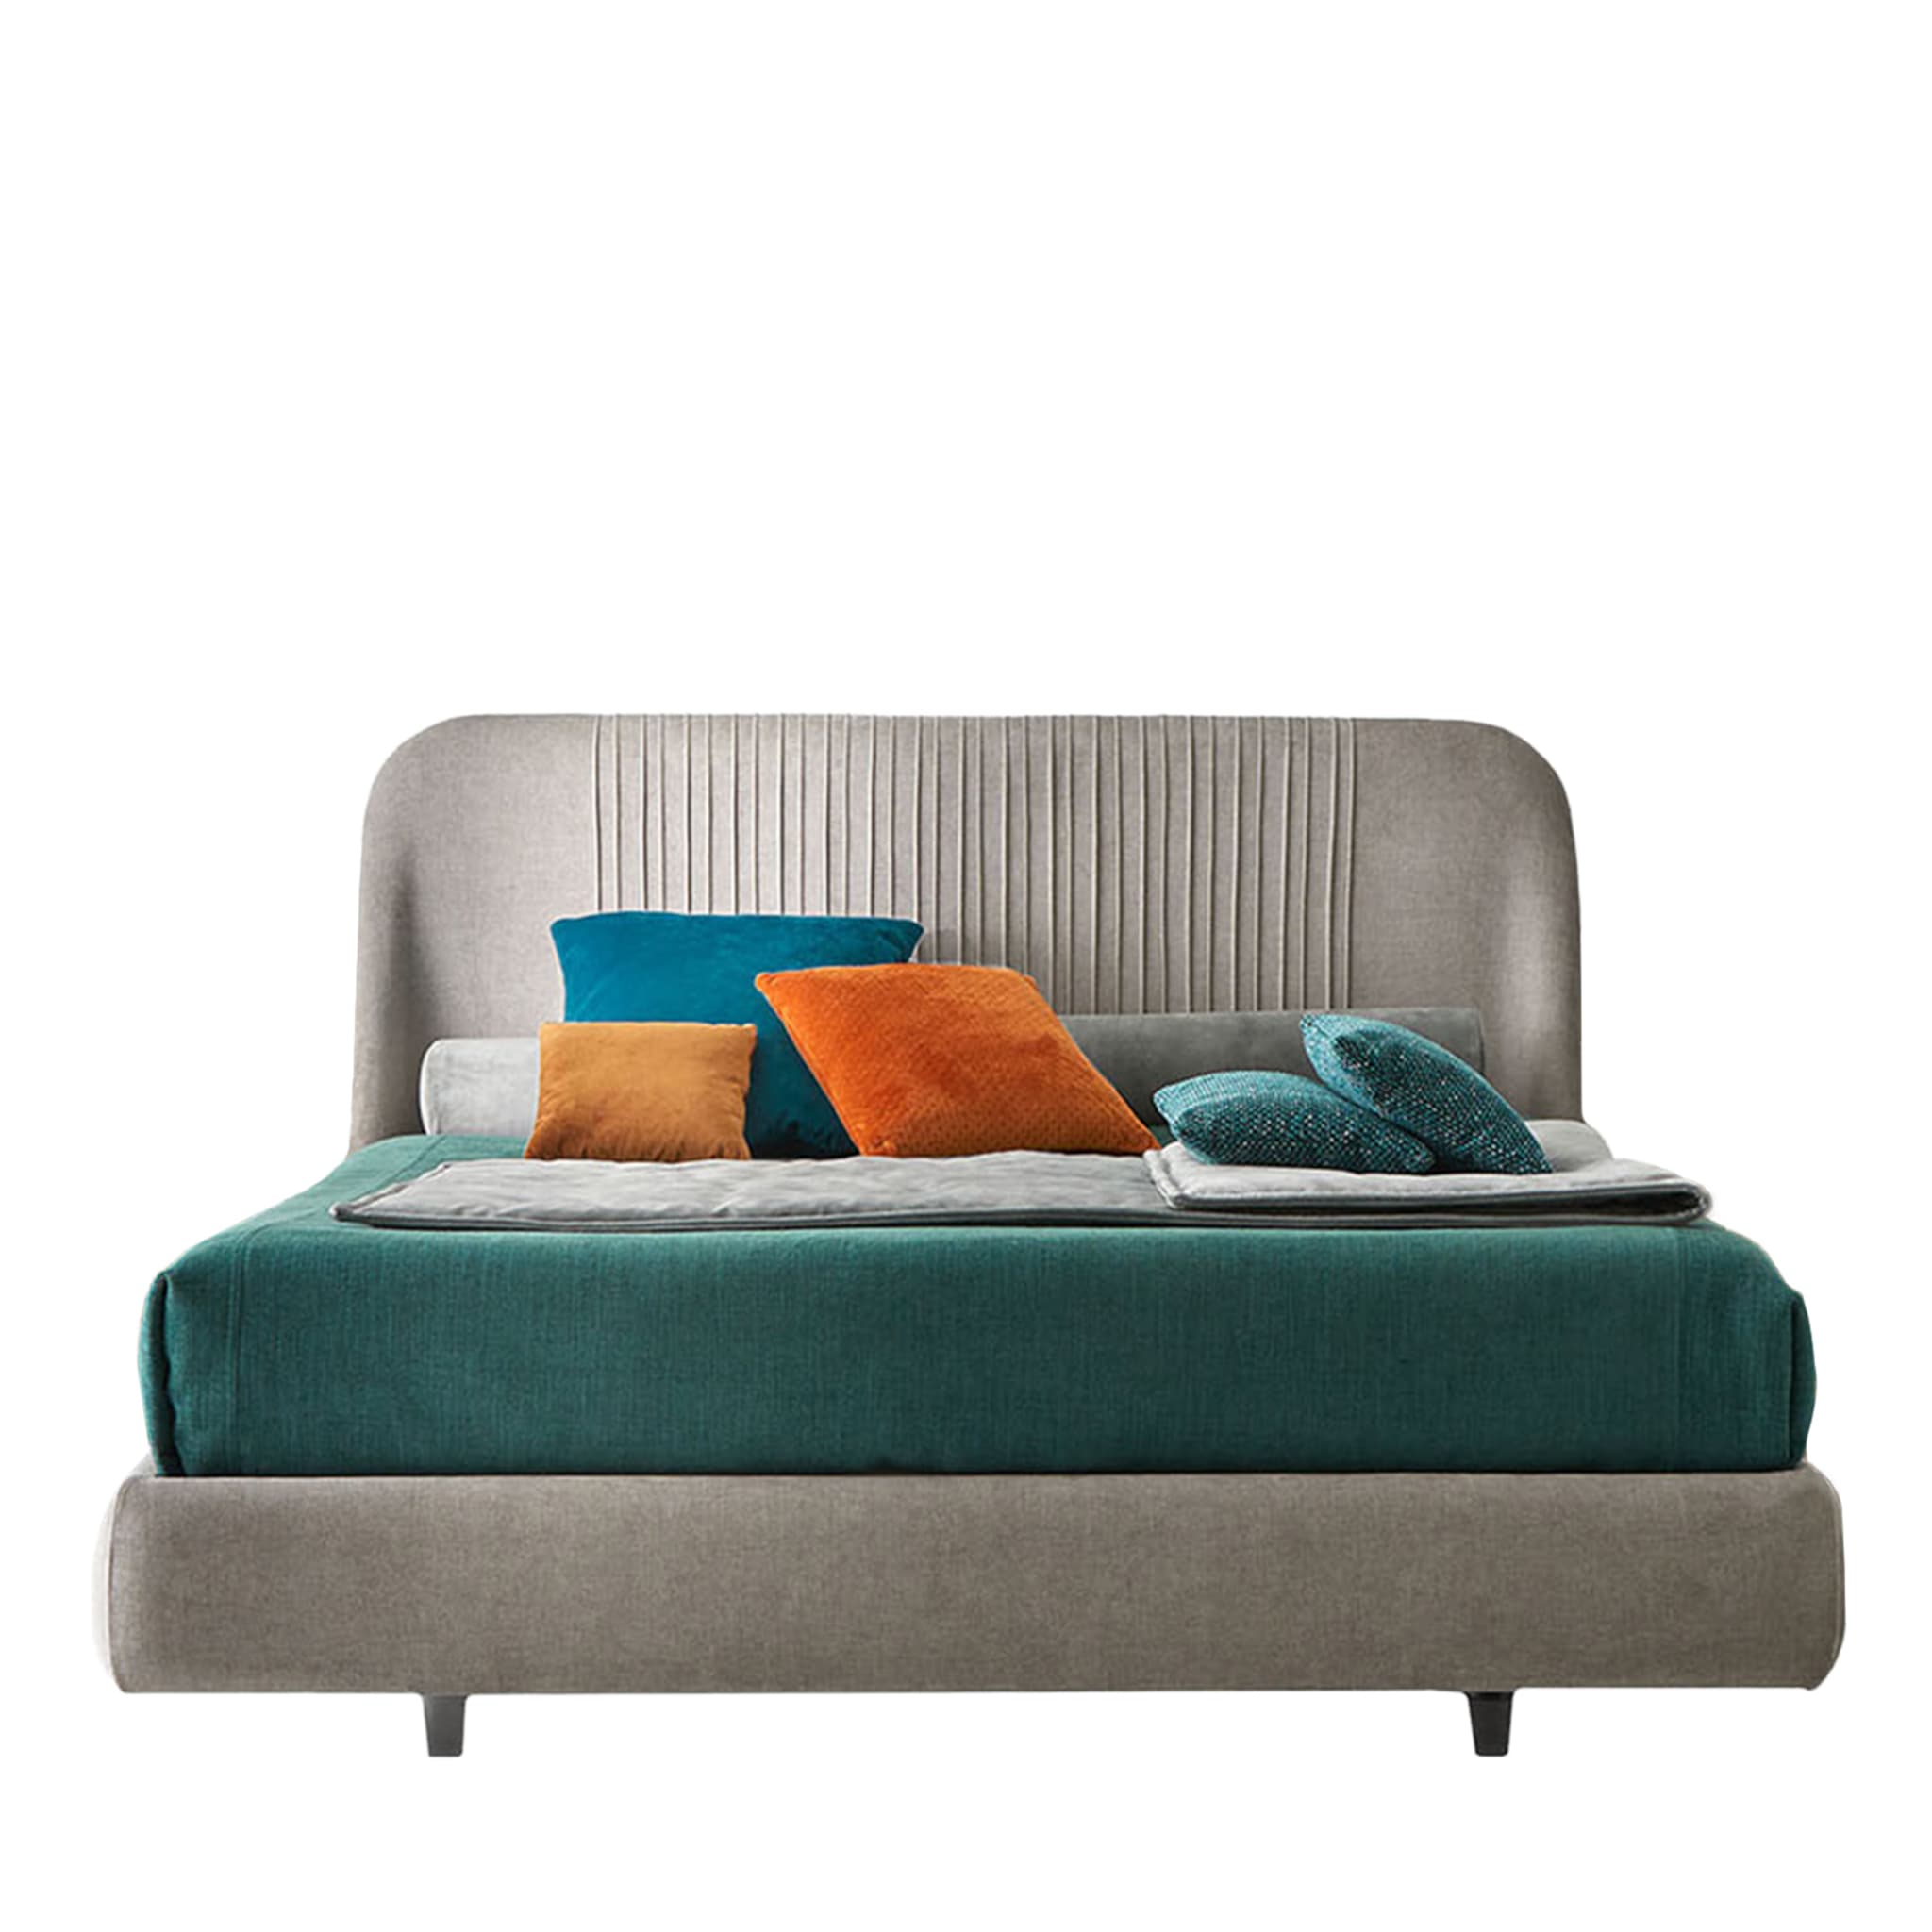 Alba Fluttuante Bed With Deluxe Velvet Upholstery - Main view